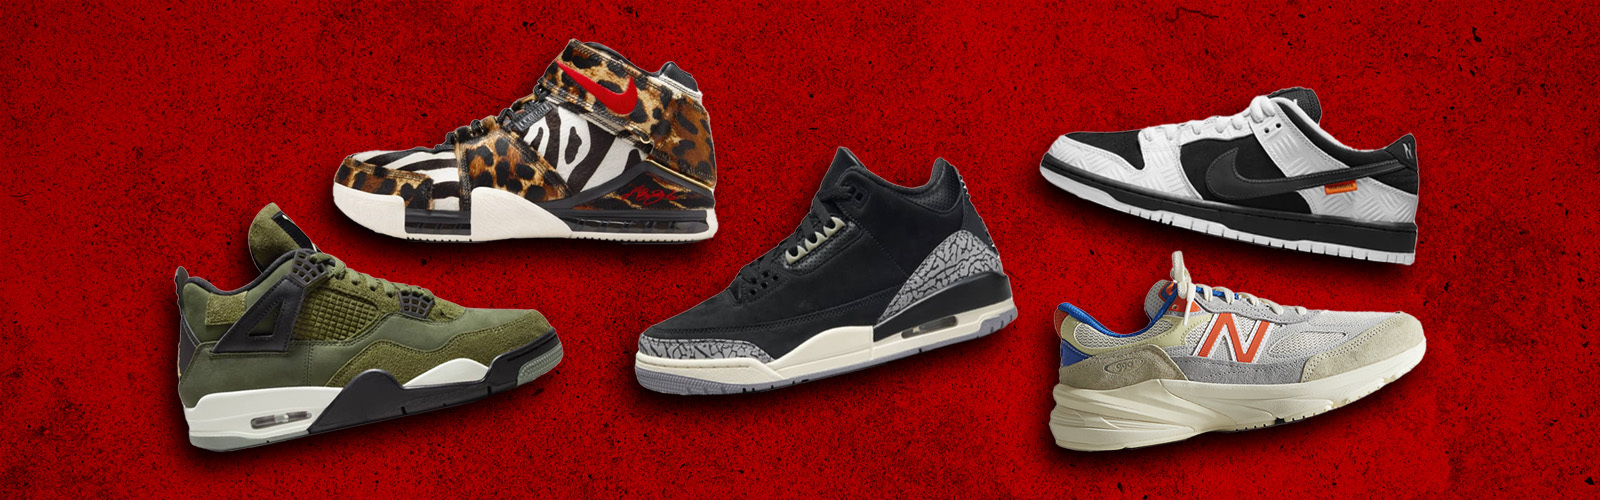 New Sneakers This Week: Starring The Jordan 4 Craft Olive